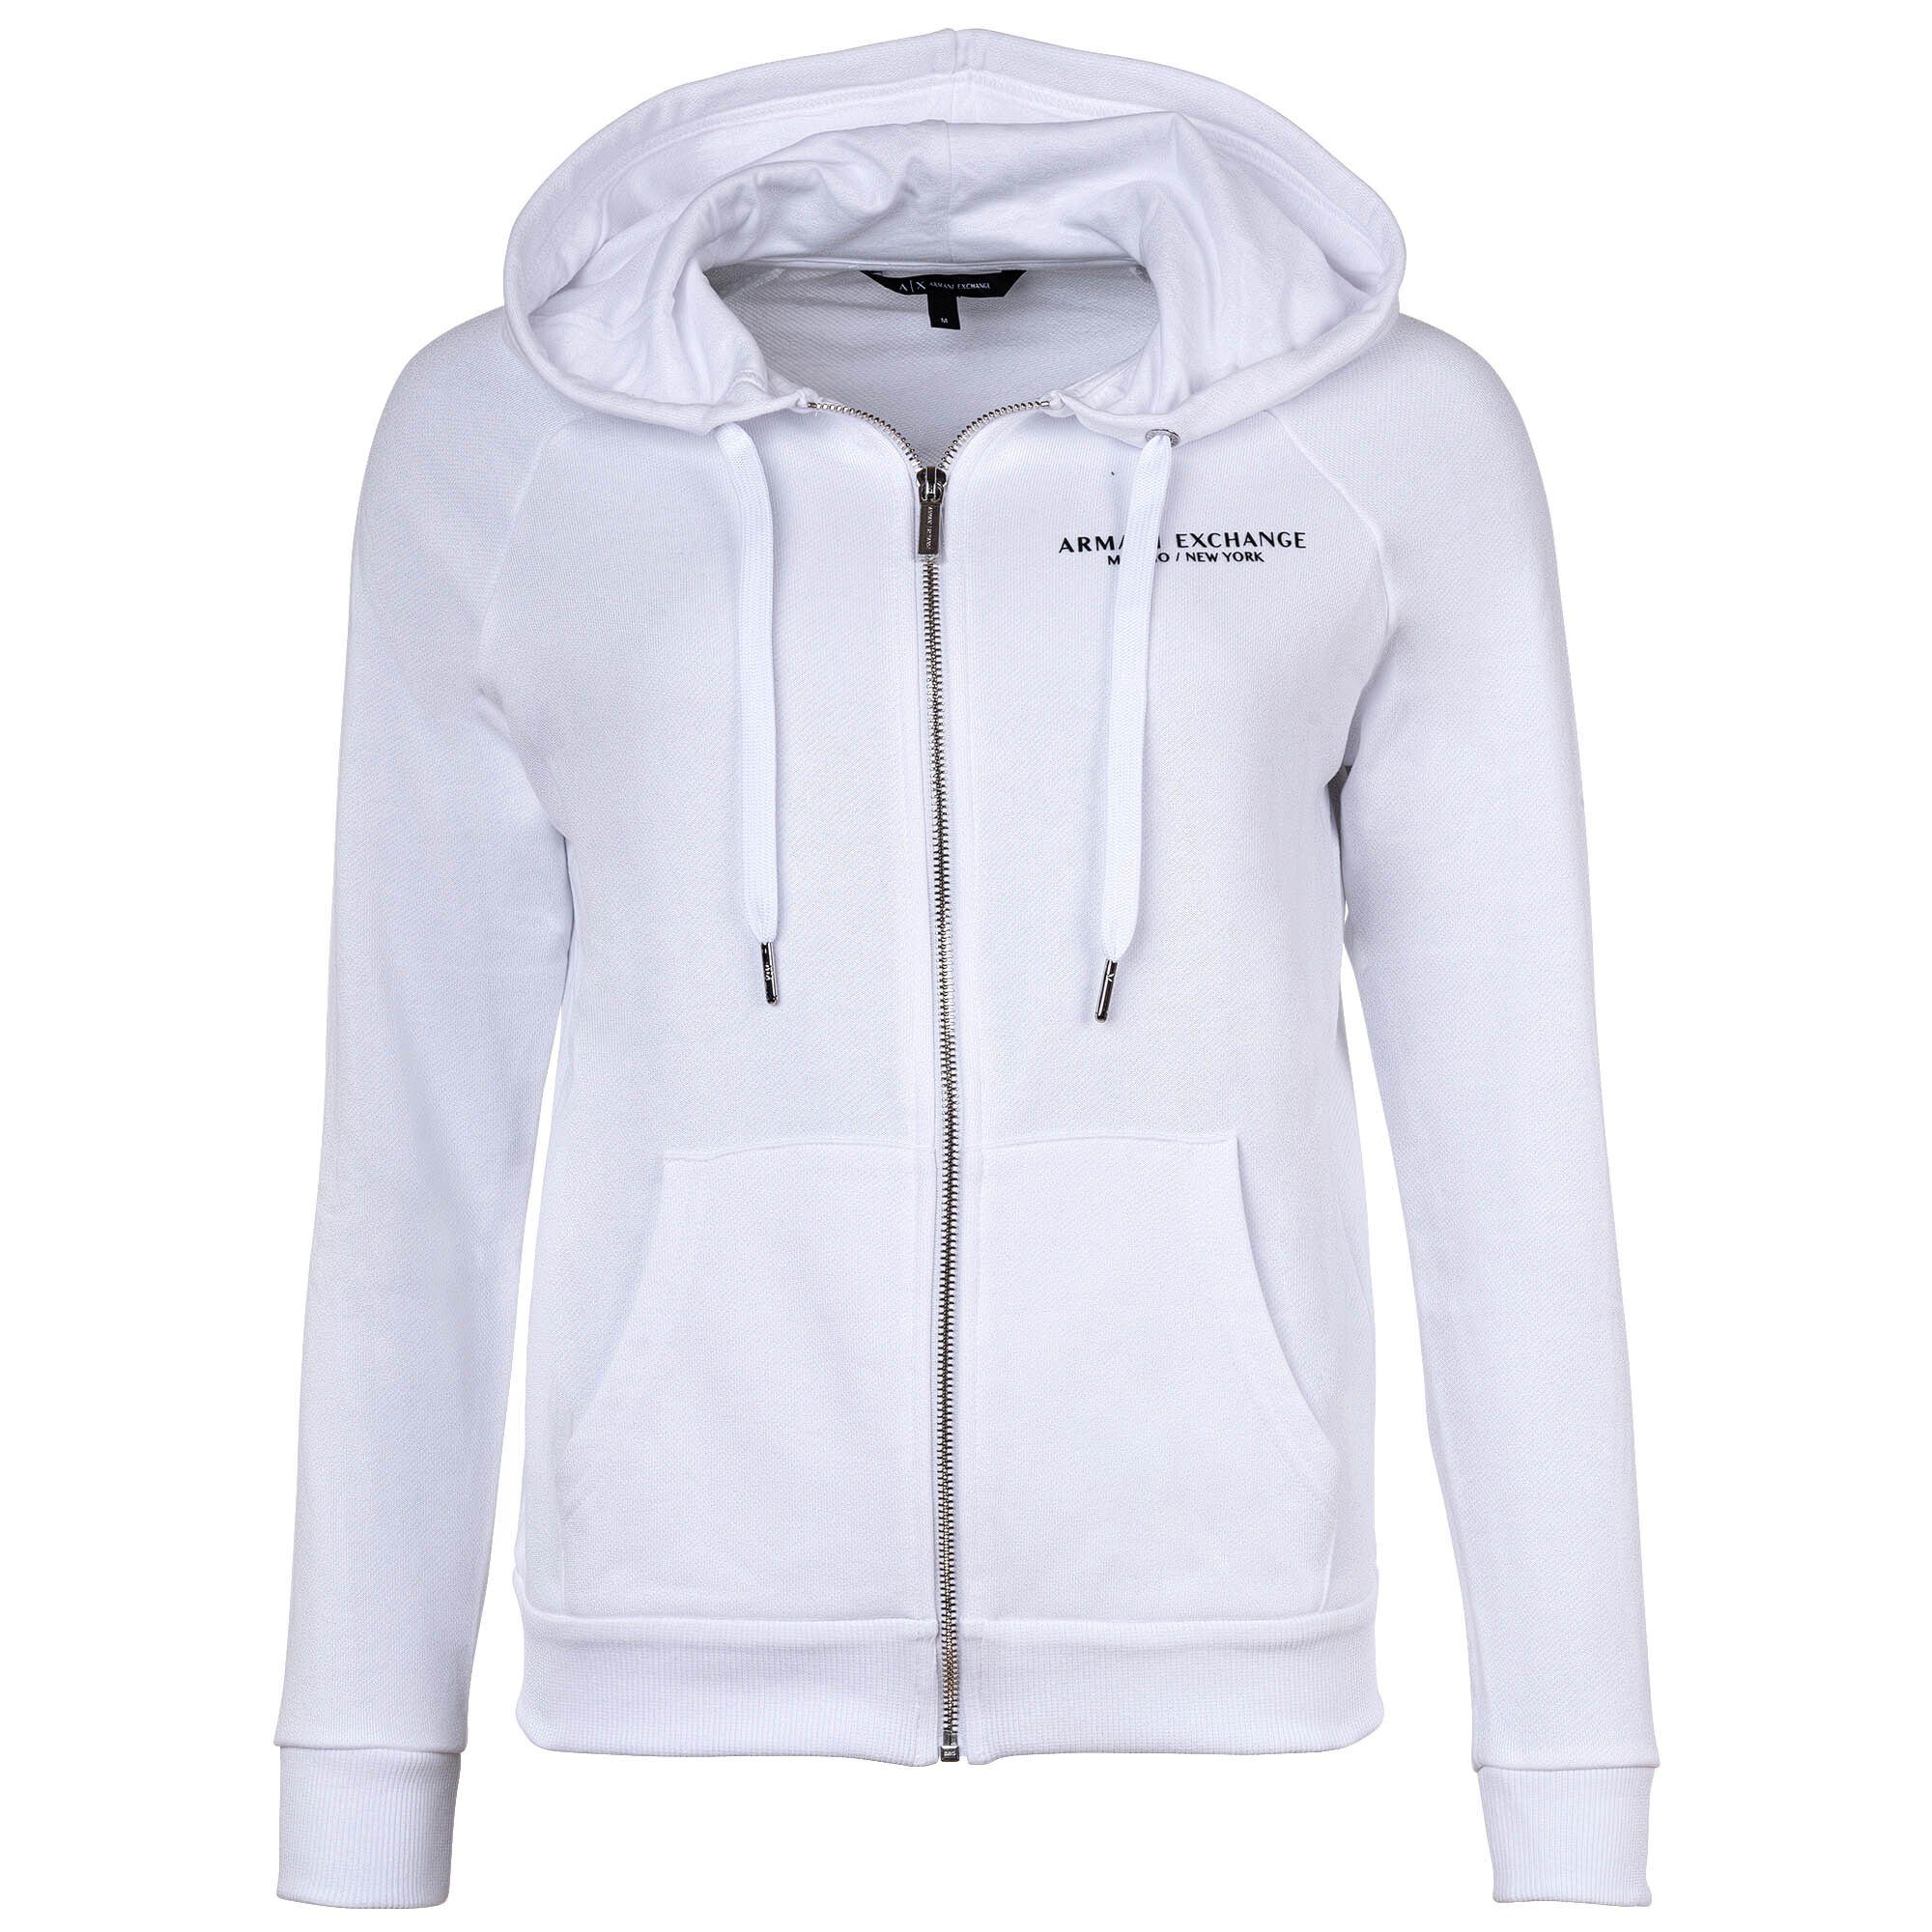 ARMANI EXCHANGE Sweater Damen Sweatjacke - Reißverschluss, Kapuze, Logo Weiß | Sweatshirts